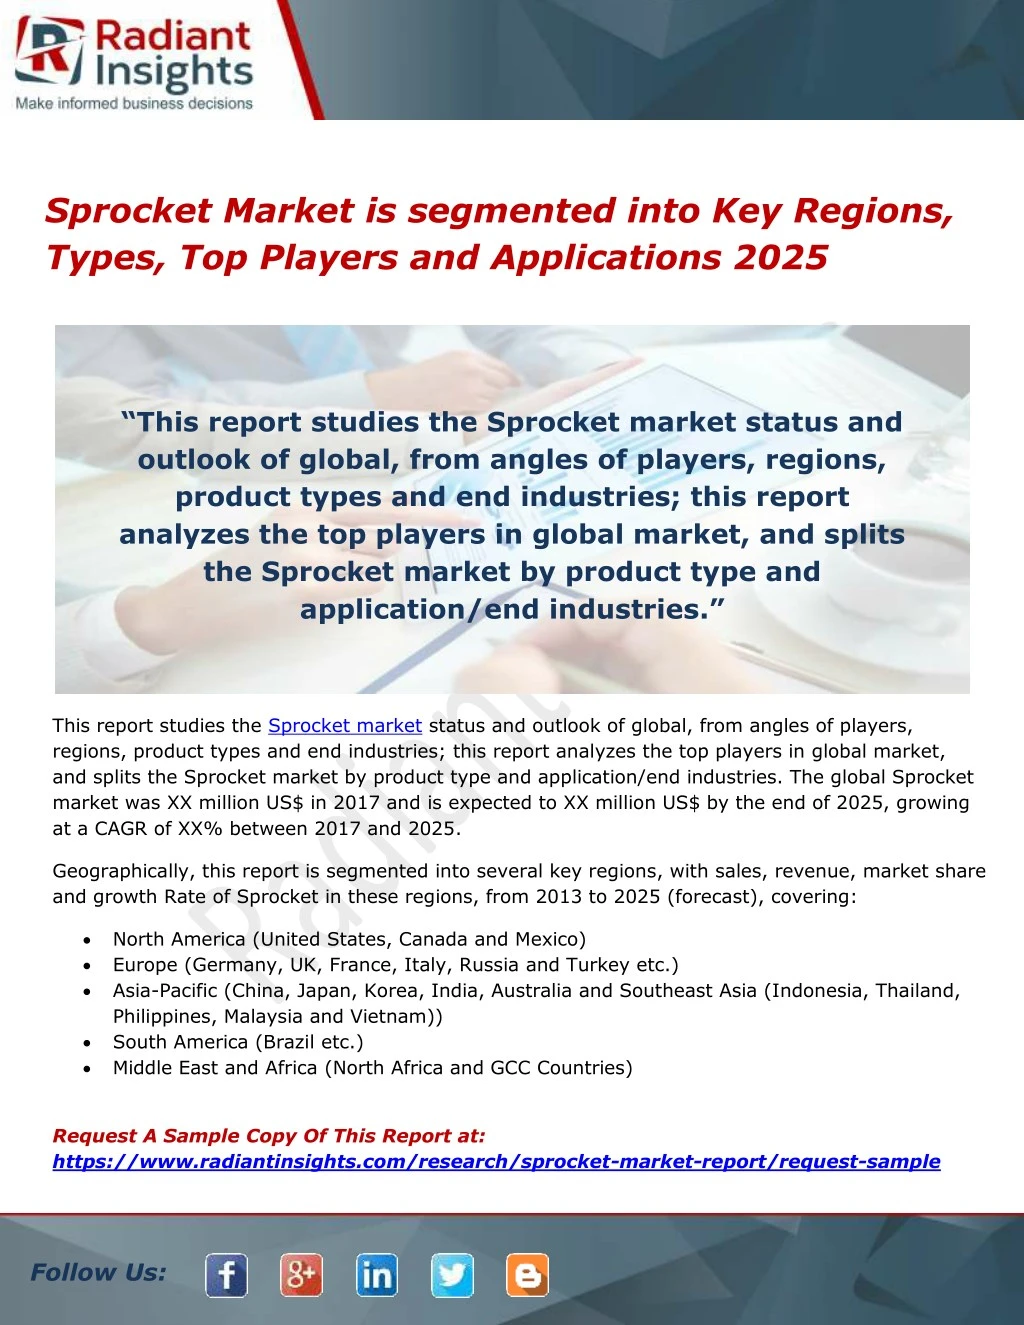 sprocket market is segmented into key regions